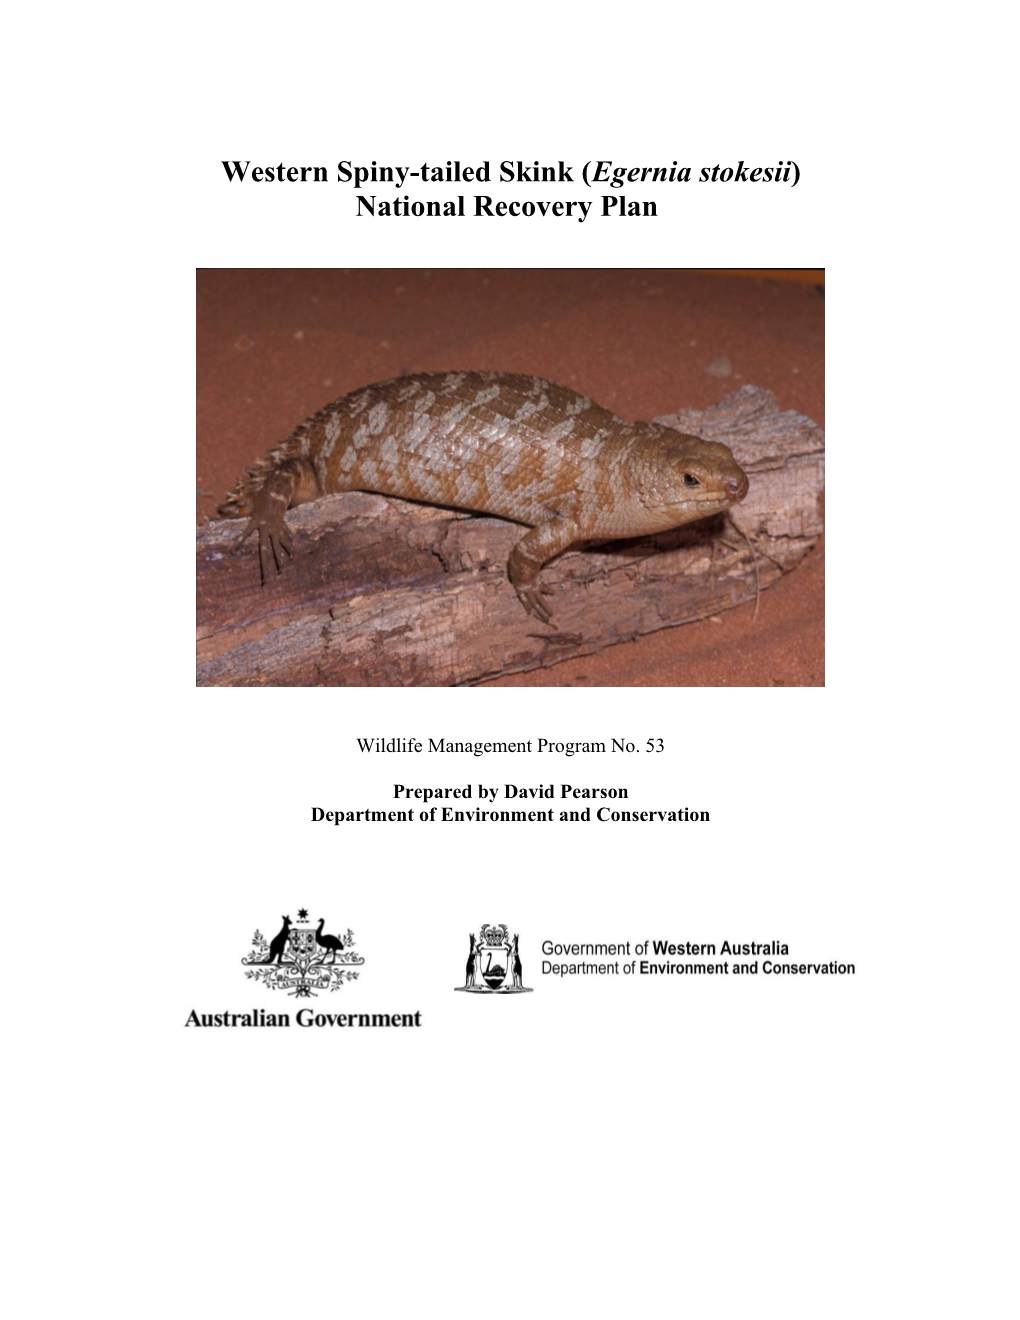 Western Spiny-Tailed Skink (Egernia Stokesii) National Recovery Plan